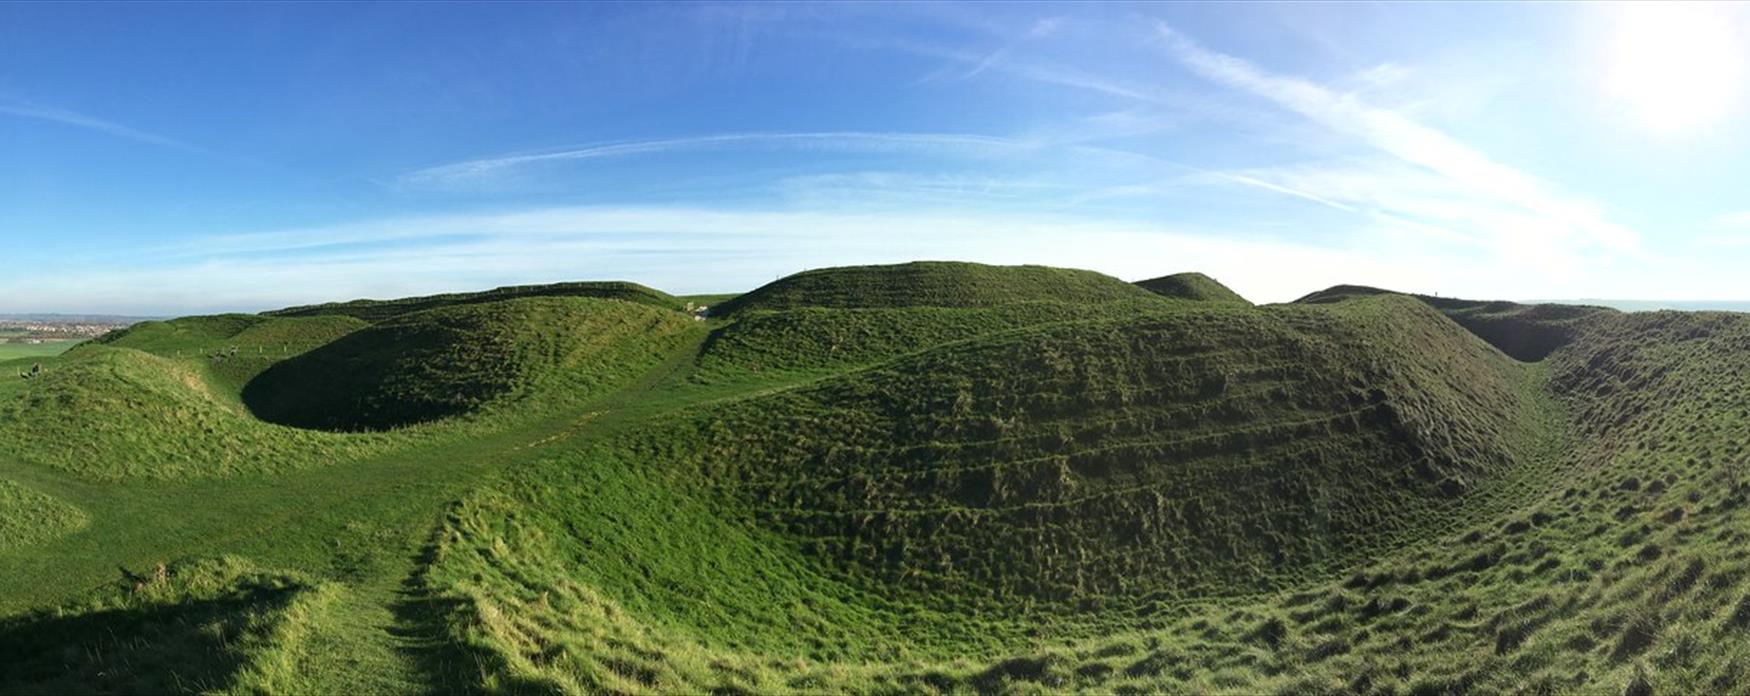 Maiden Castle Hillfort. Large, green, grassy raised earthworks set against a blue sky.